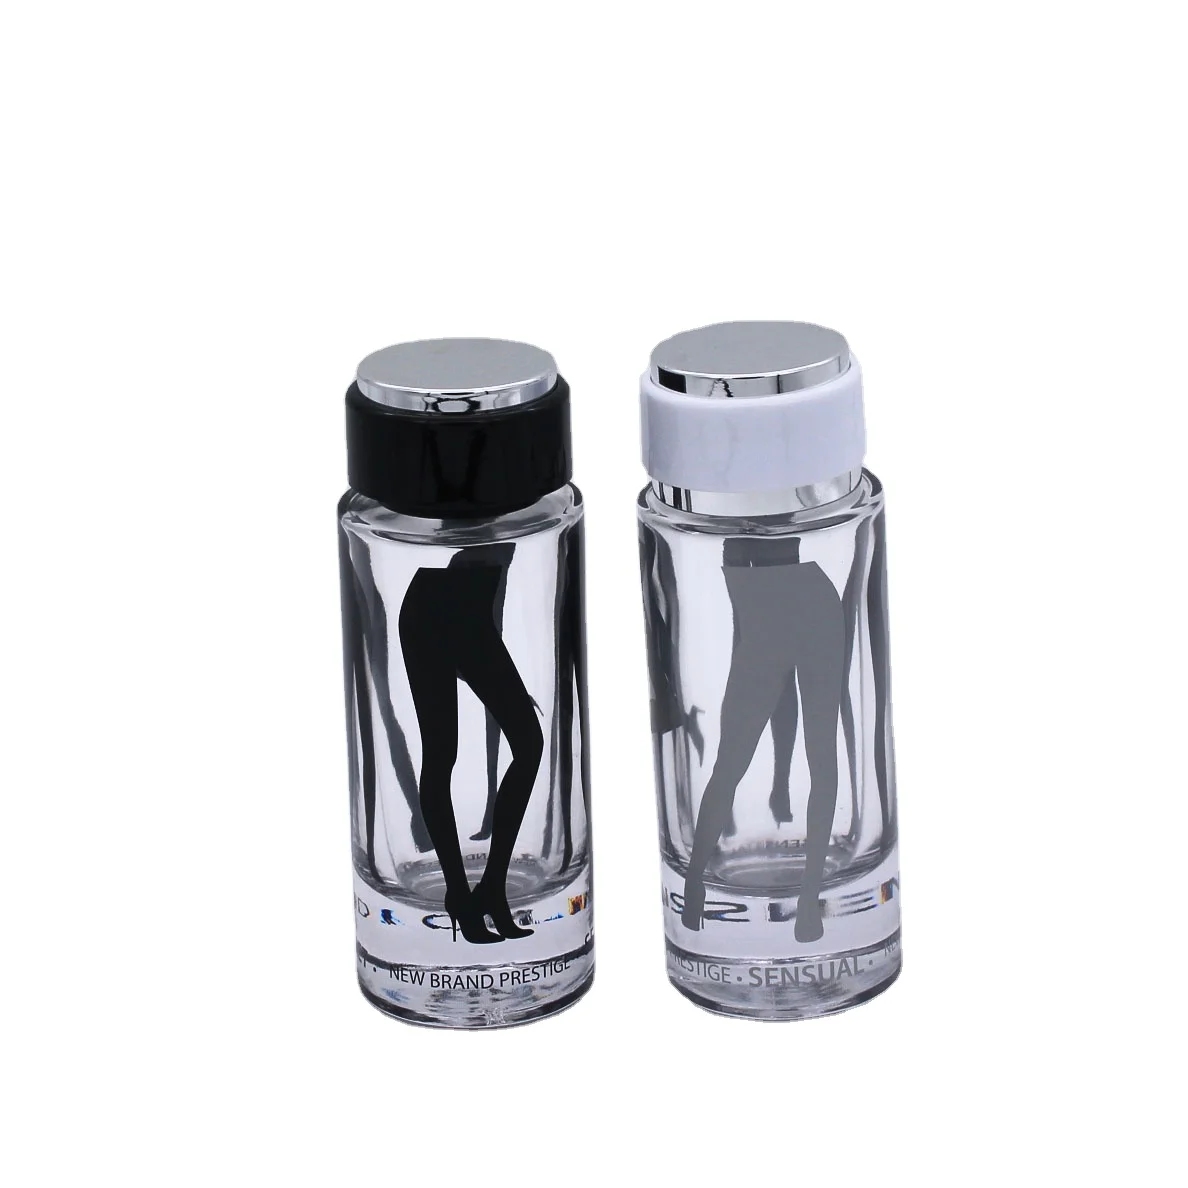 Customized elegant sexy unique round 100ml glass perfume spray bottle